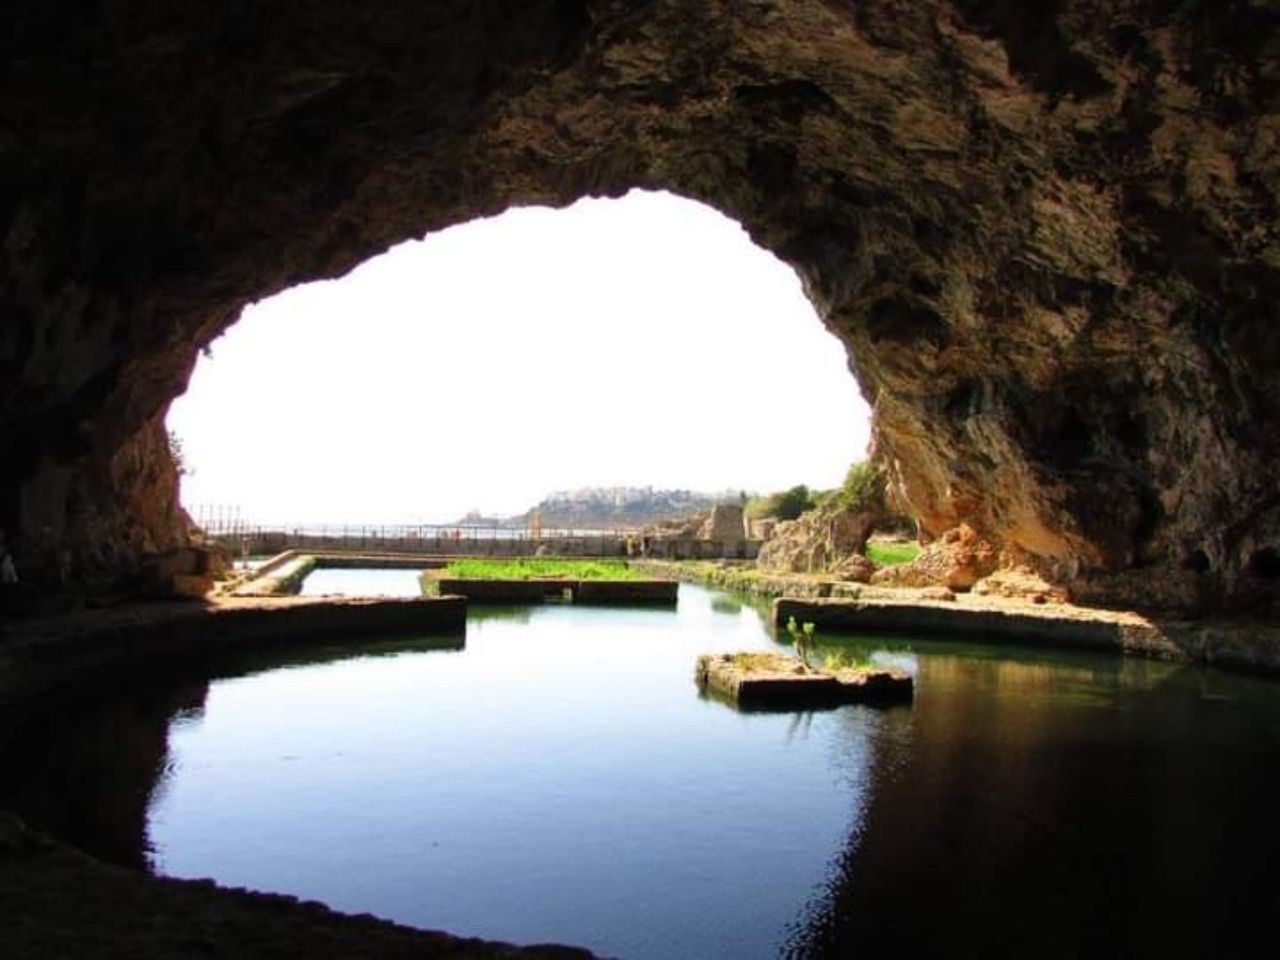 Grotta di Tiberio - From Im Inneren, Italy